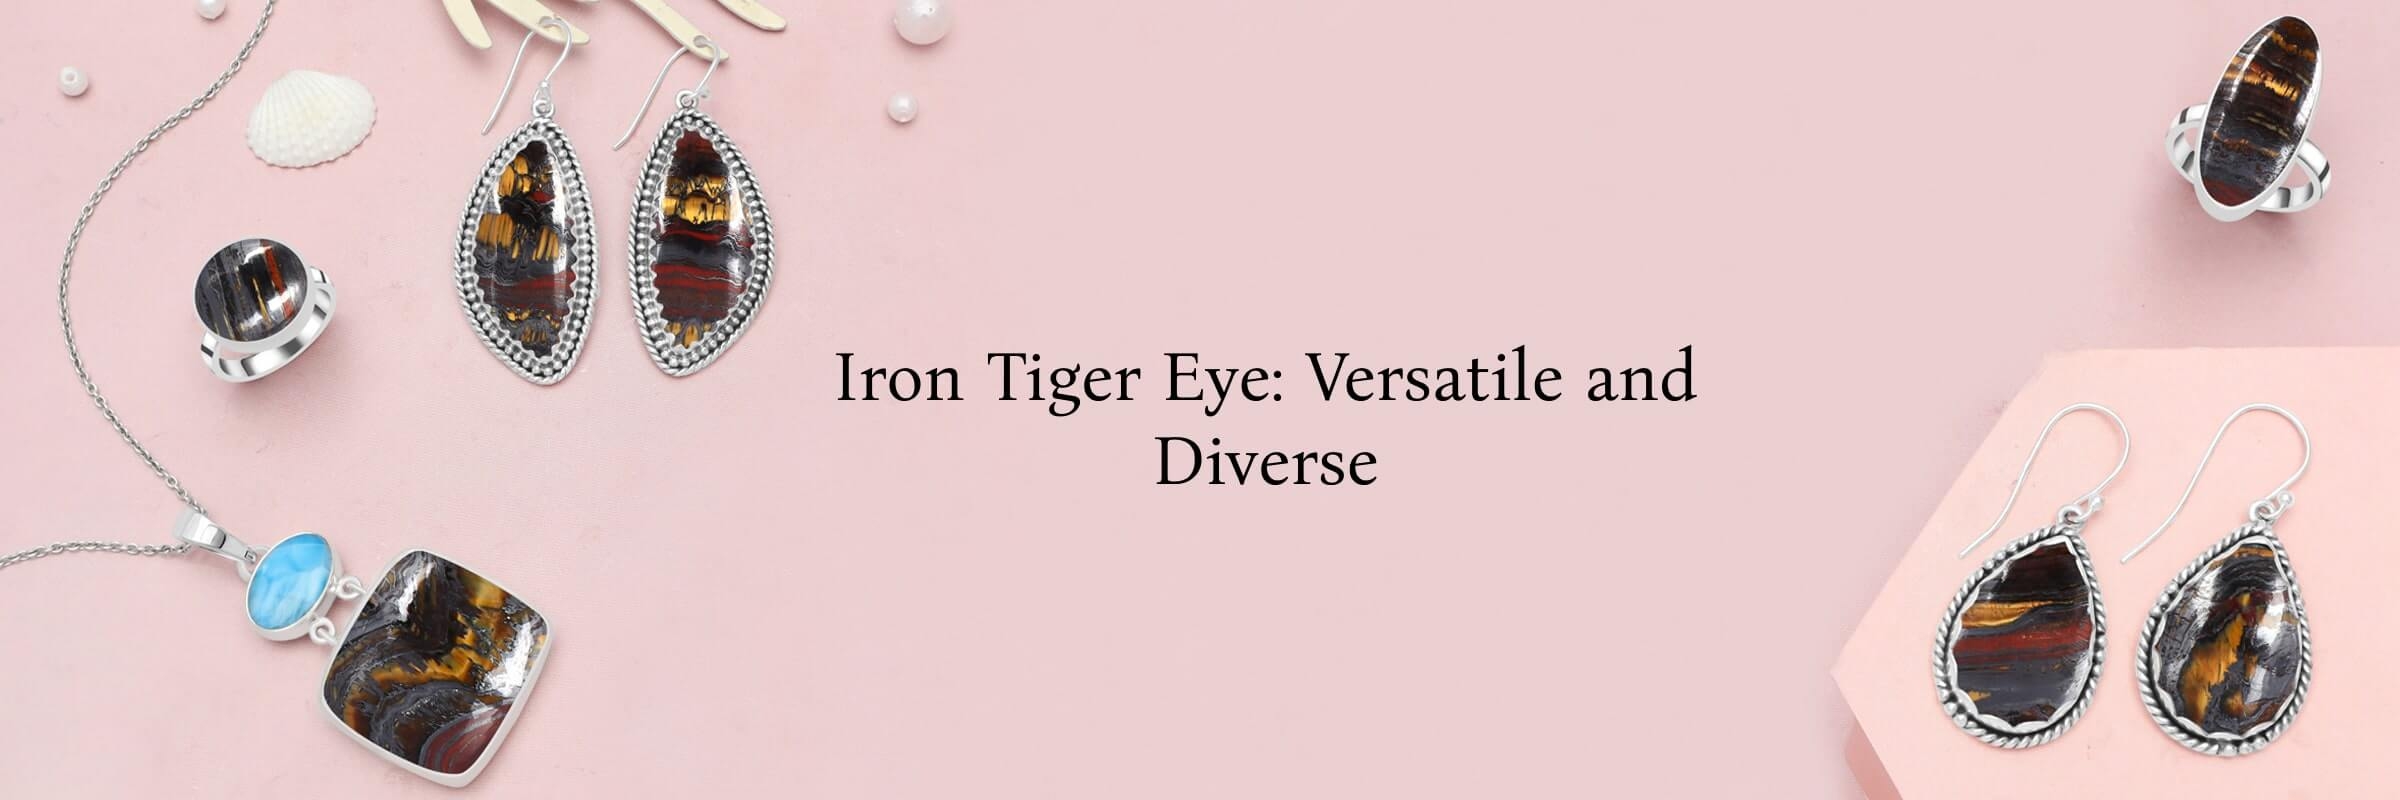 Uses of Iron Tiger Eye Stone